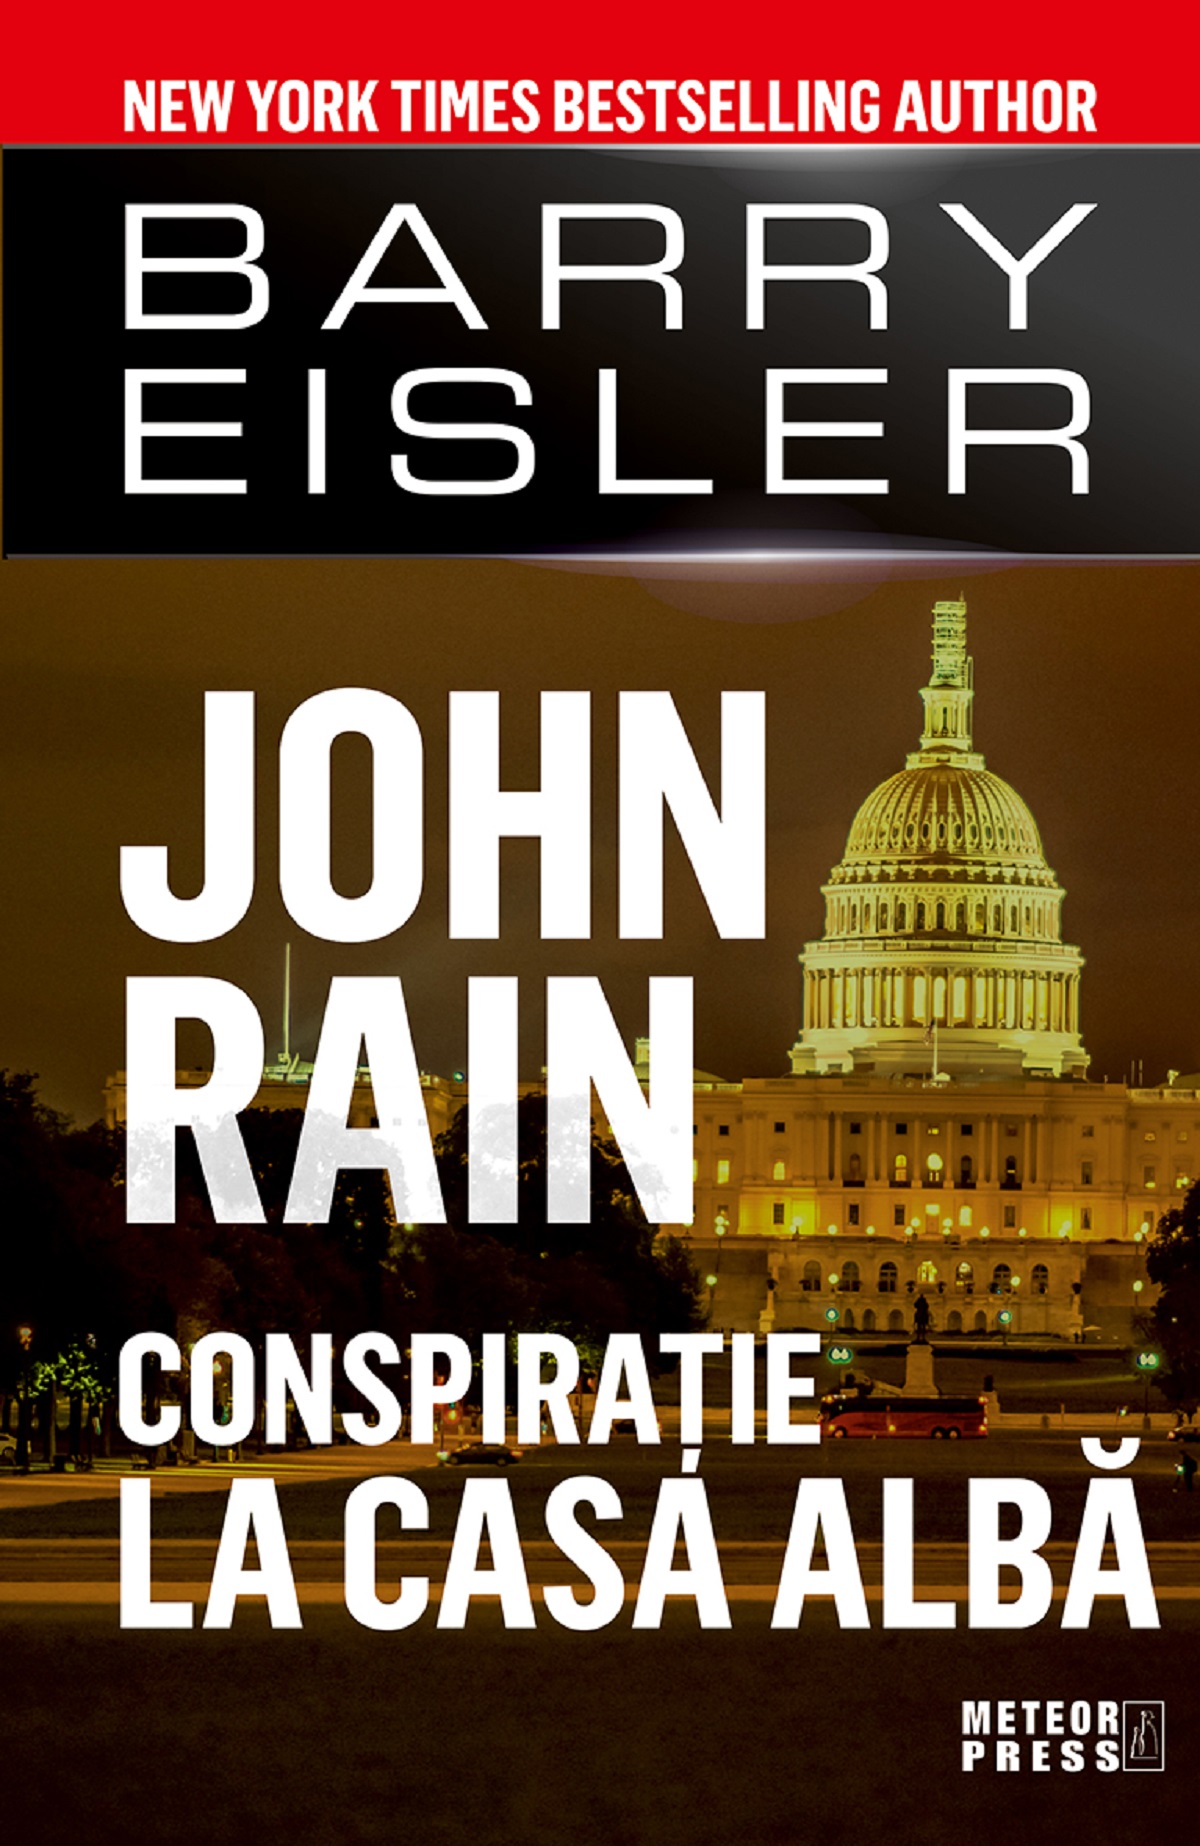 John Rain. Conspiratie la Casa Alba - Barry Eisler